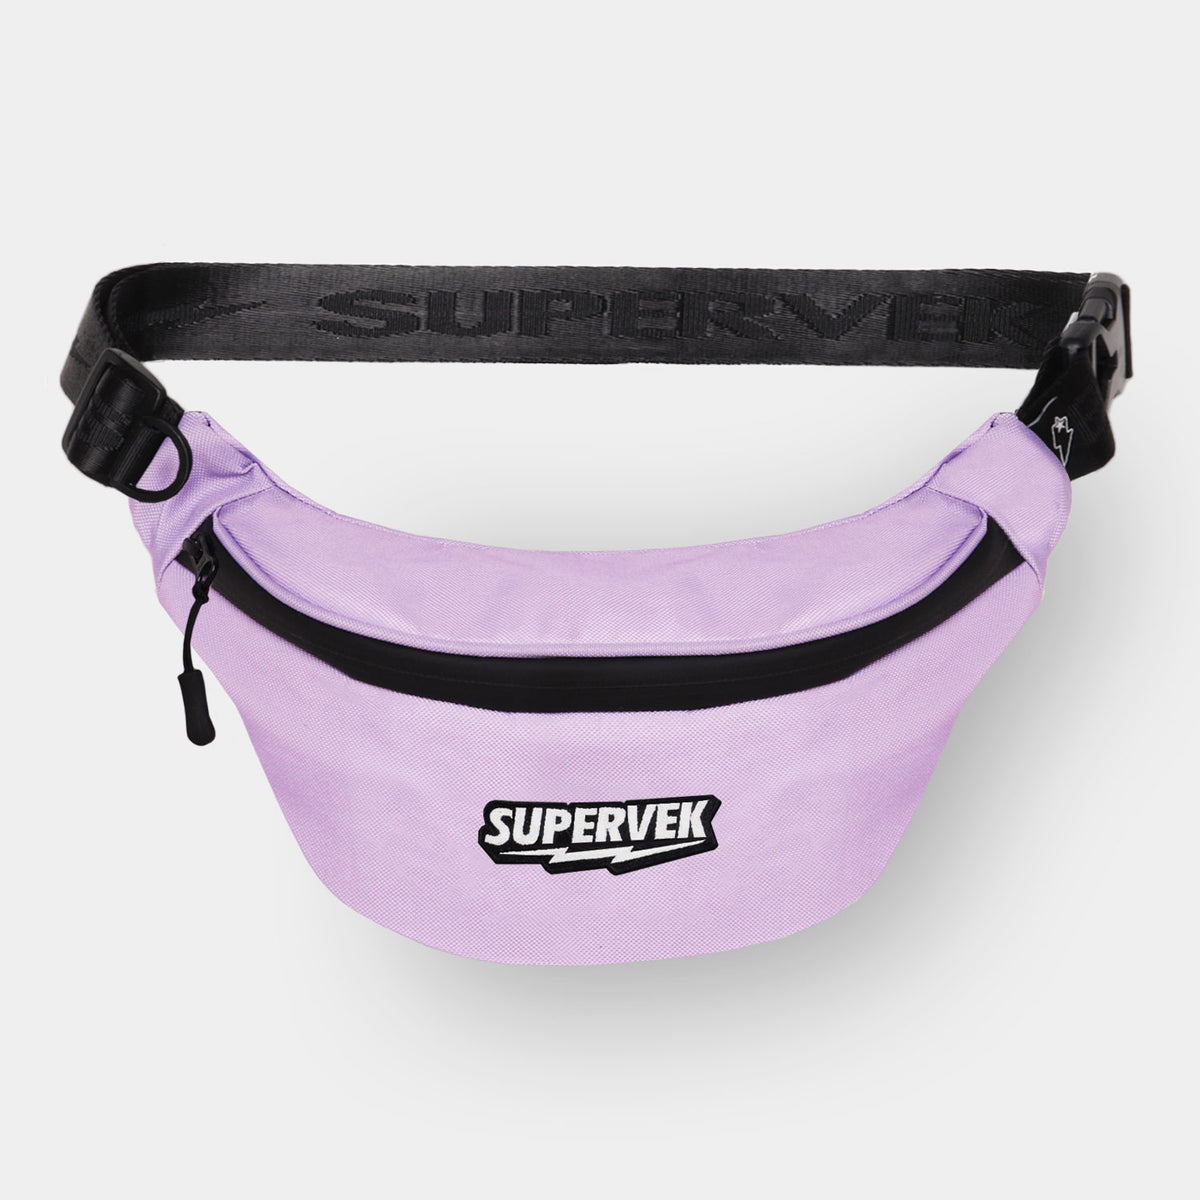 Supervek Crossbody Slinger - Lilac - Urban Functional Fanny Hip Bag for Everyday Essentials